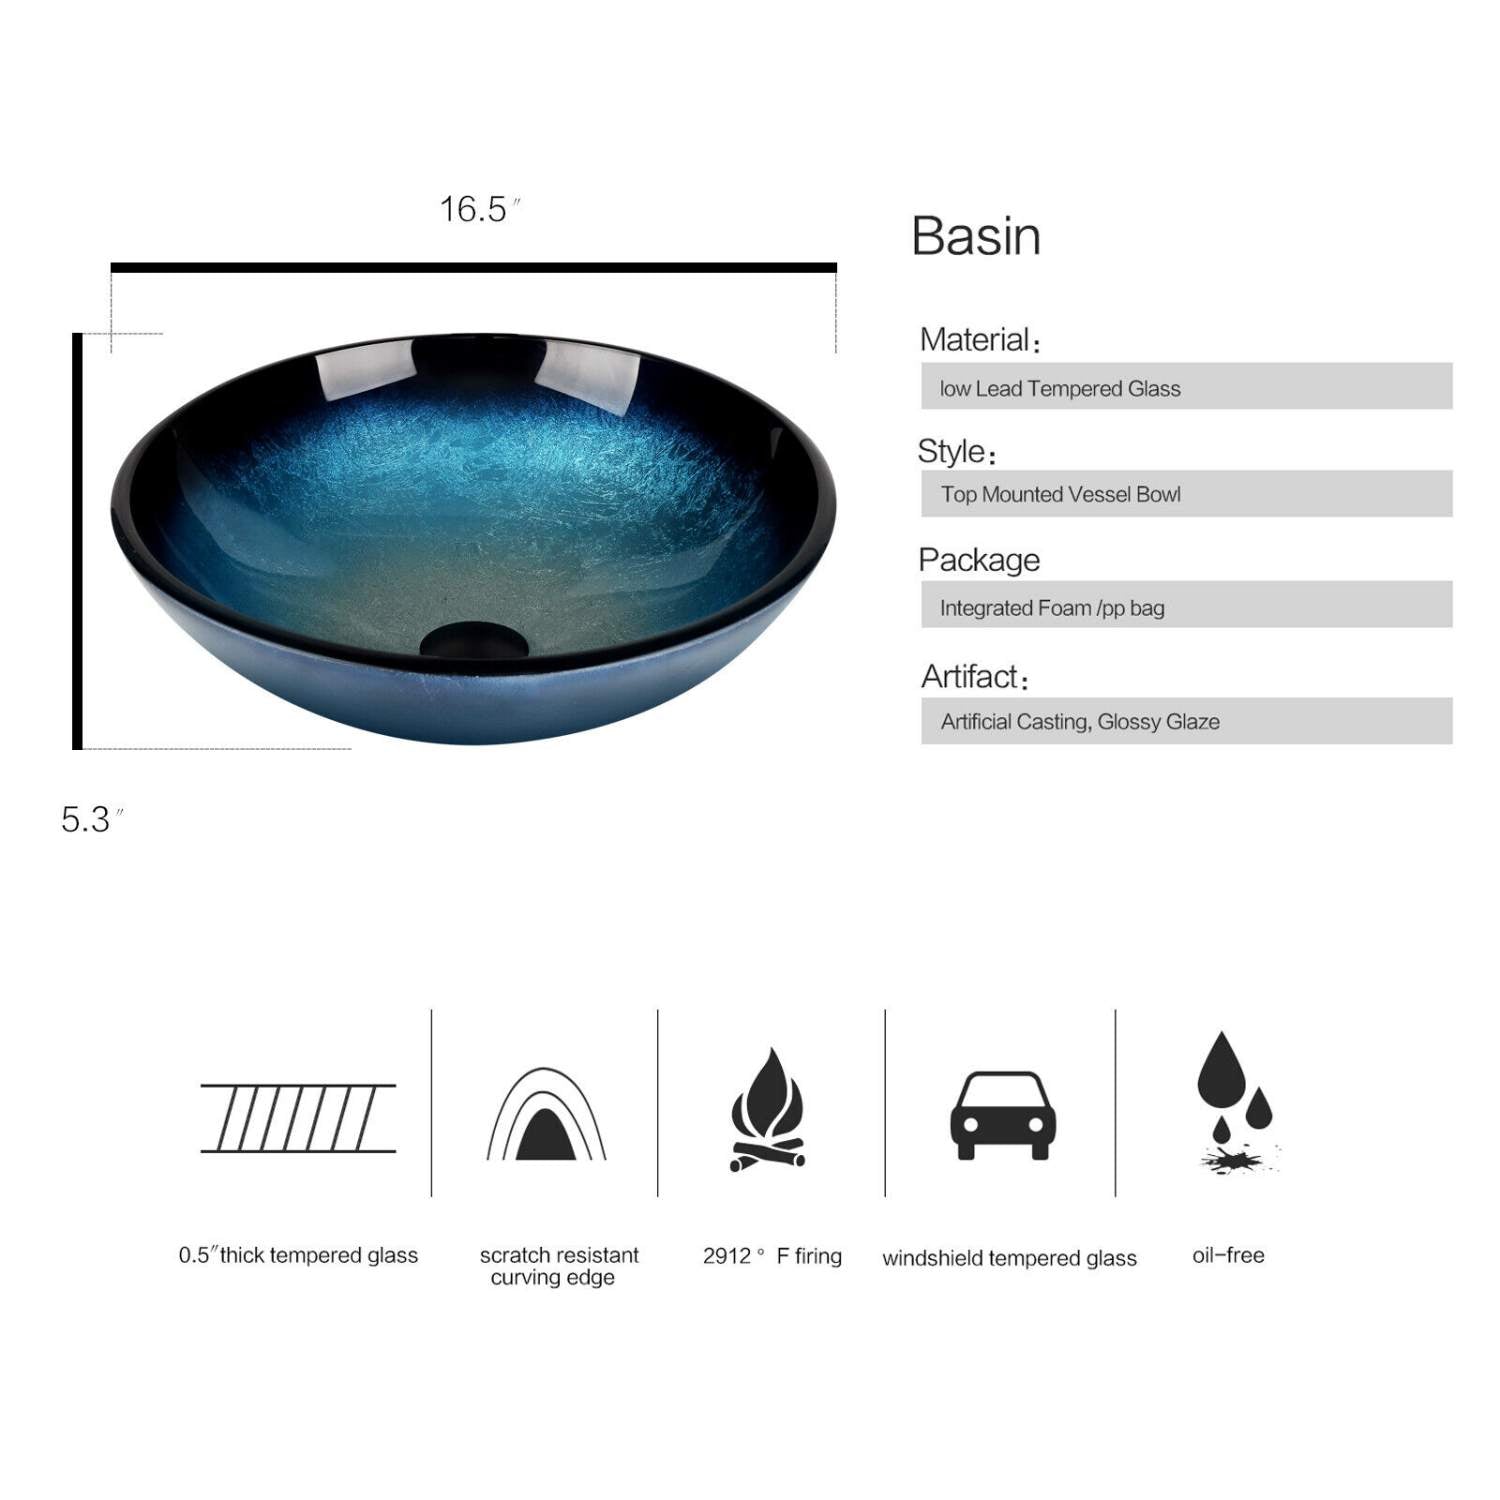 Elecwish Shiny blue sink basin size and description